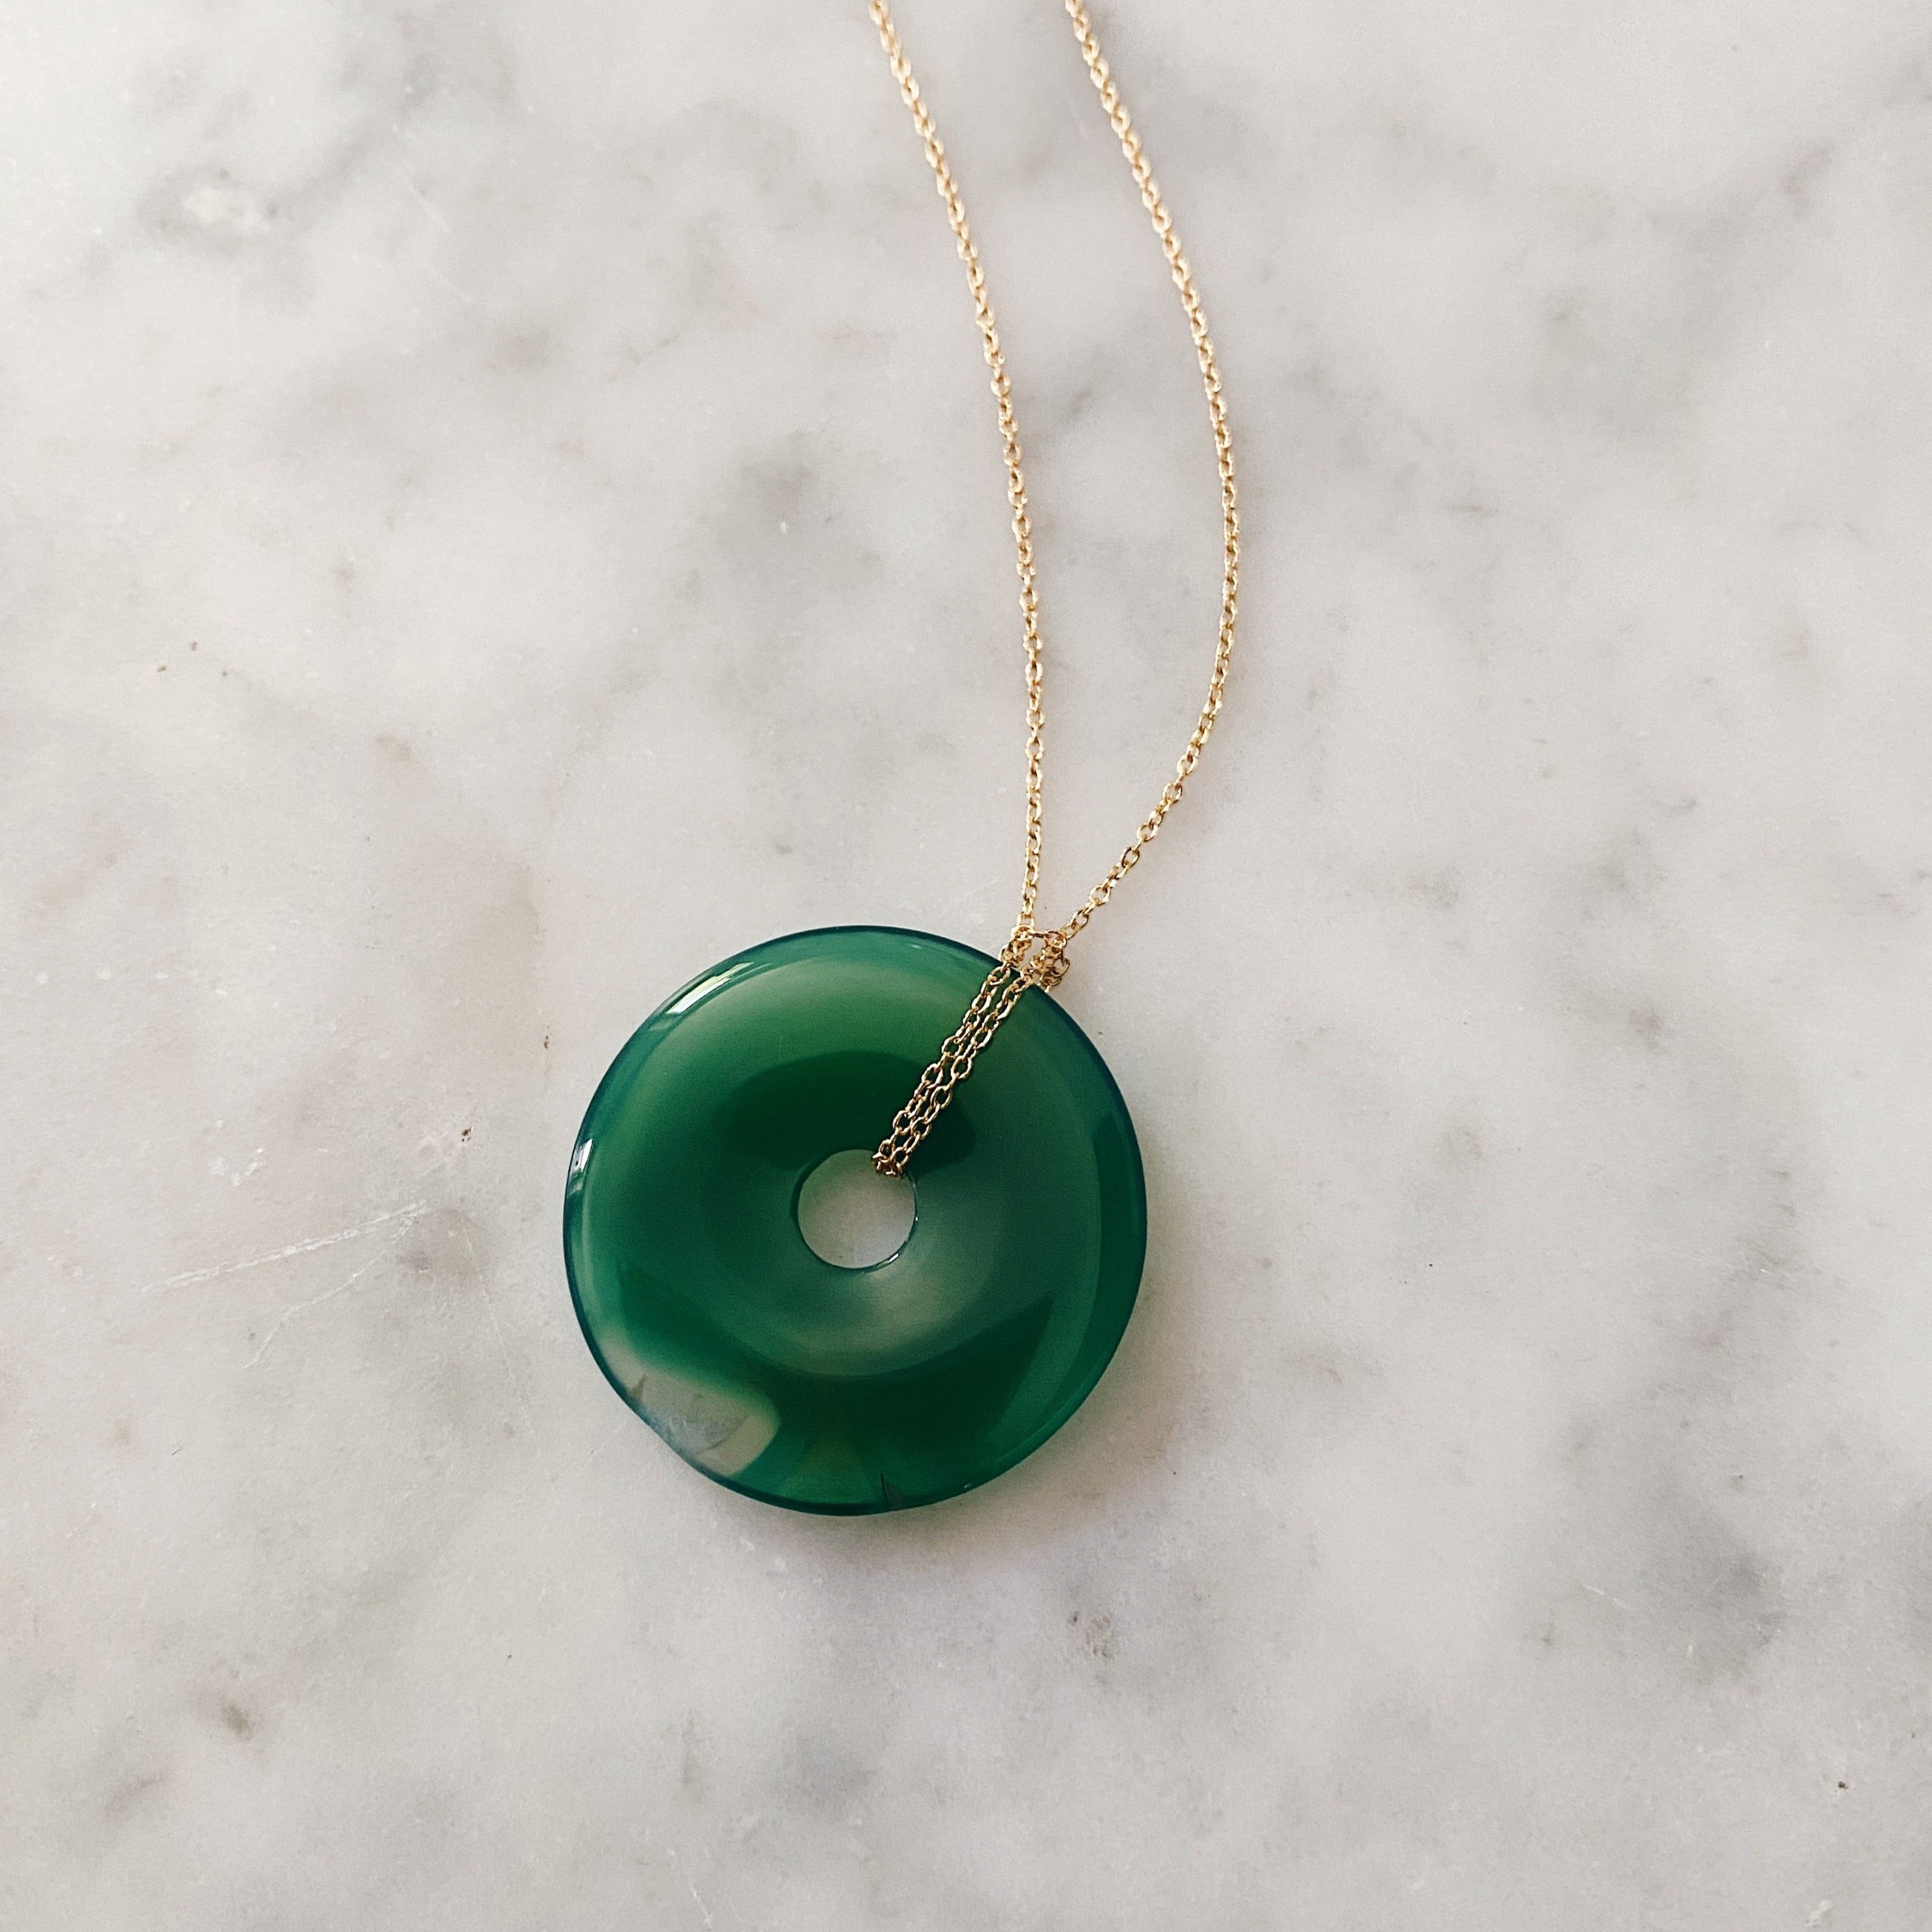 Beignet Necklace - Green Agate